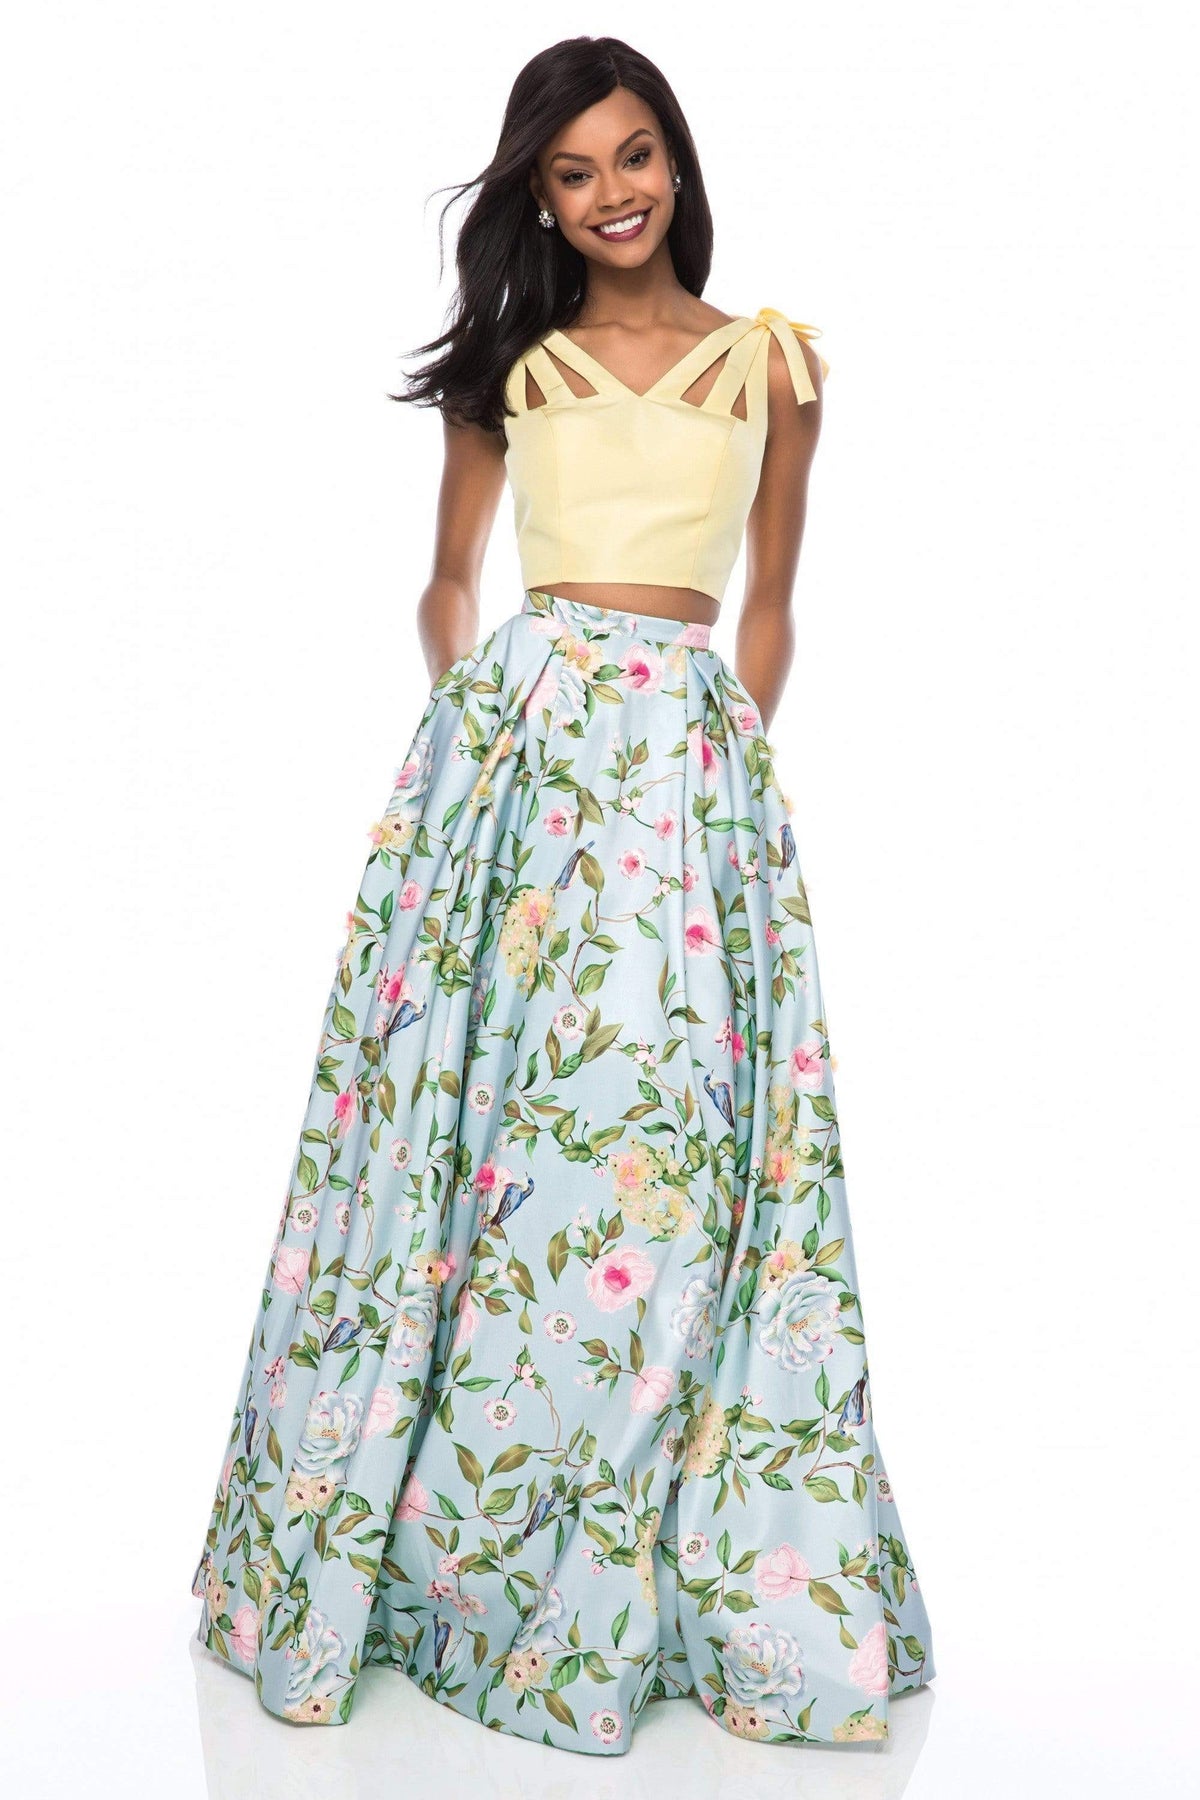 Sherri Hill - 51959 Two Piece V-neck Floral Print A-line Dress Prom Dresses 00 / Yellow/Aqua Print